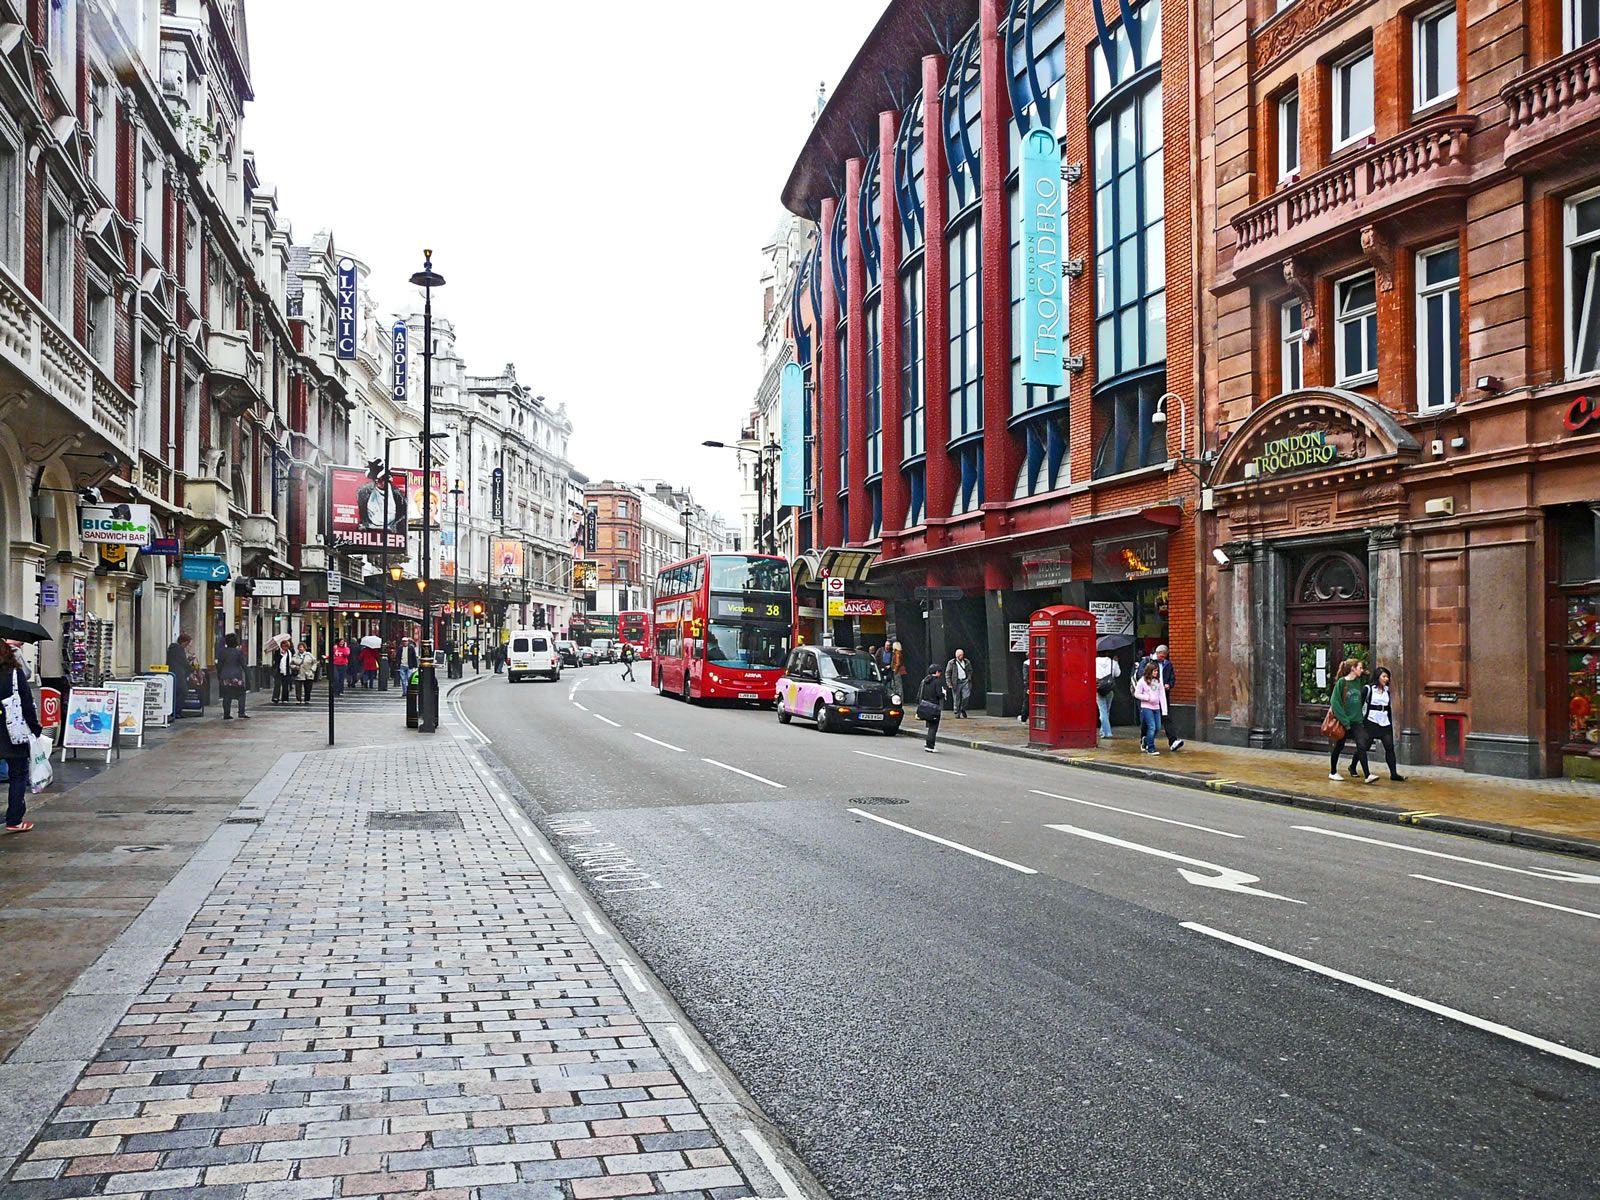 Streets avenue. Улица Шафтсбери Авеню в Лондоне. Авеню роуд в Лондоне. Кингс роуд Англия. Корк стрит Лондон.